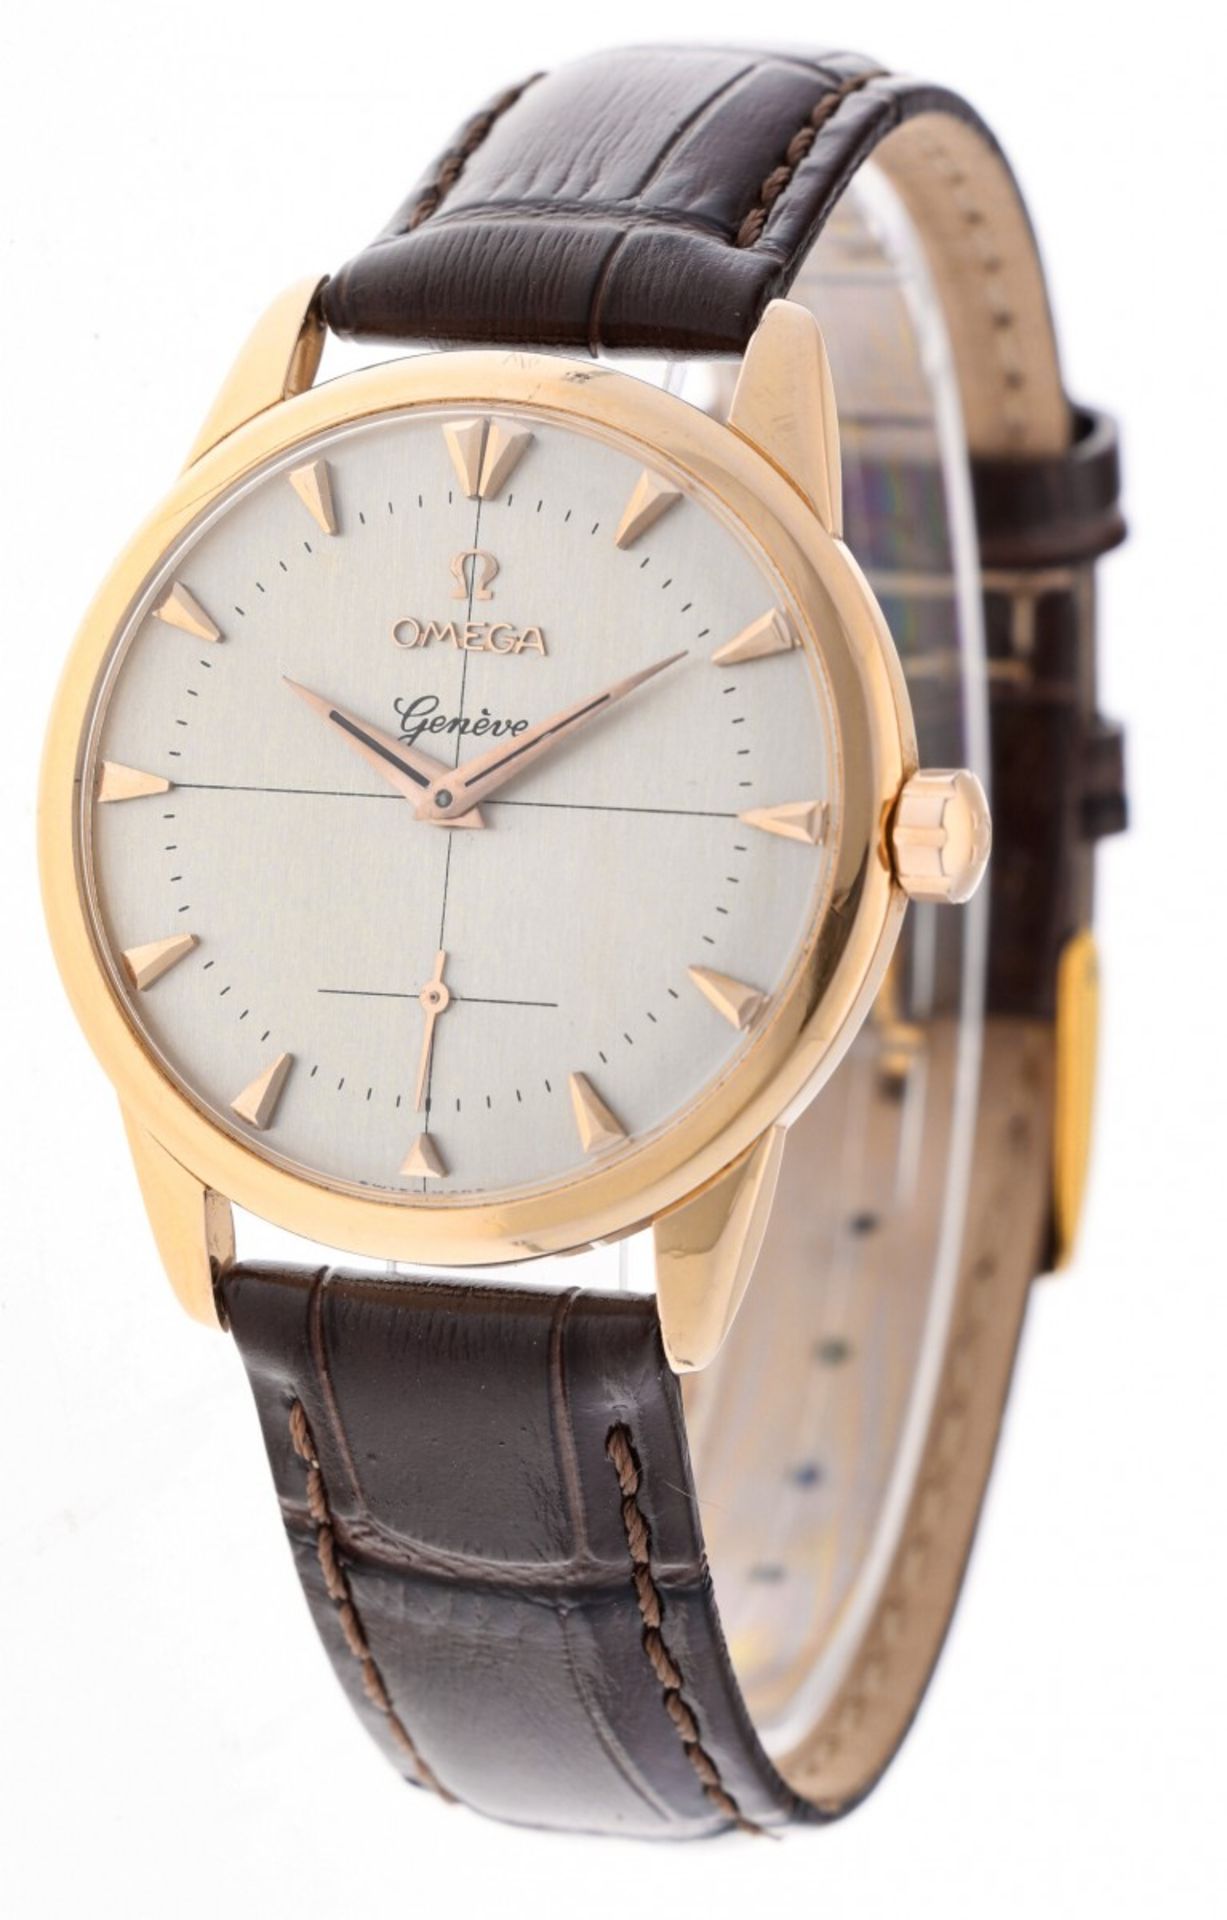 Omega Genéve Jumbo 2904 - Men's watch - ca. 1958 - Image 2 of 7